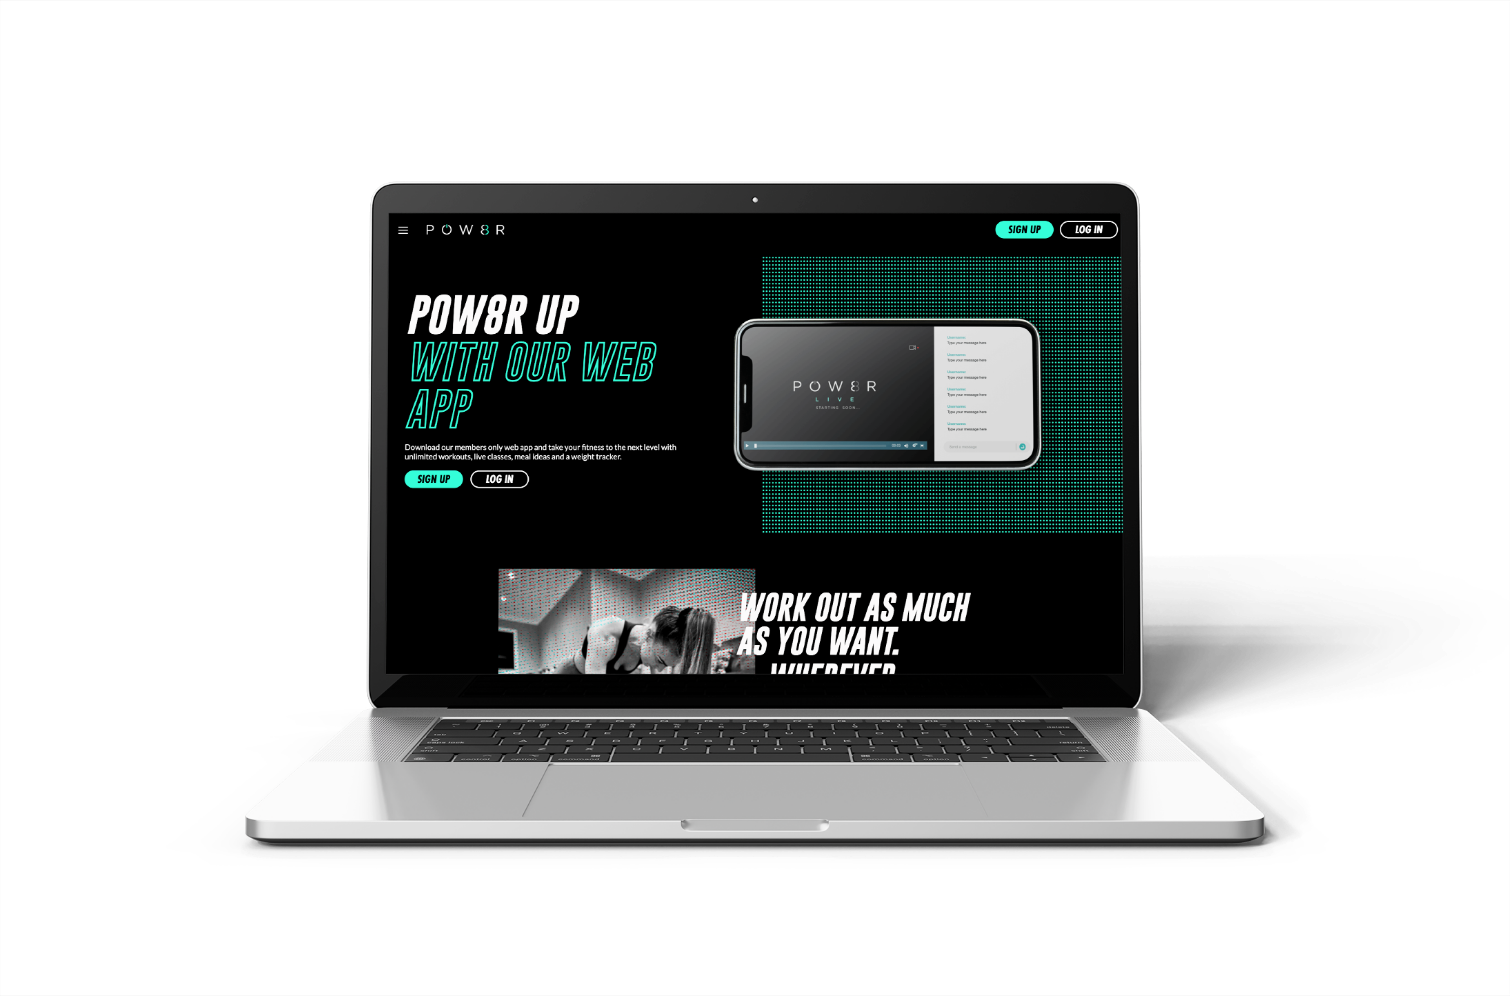 pow8r desktop website screenshot